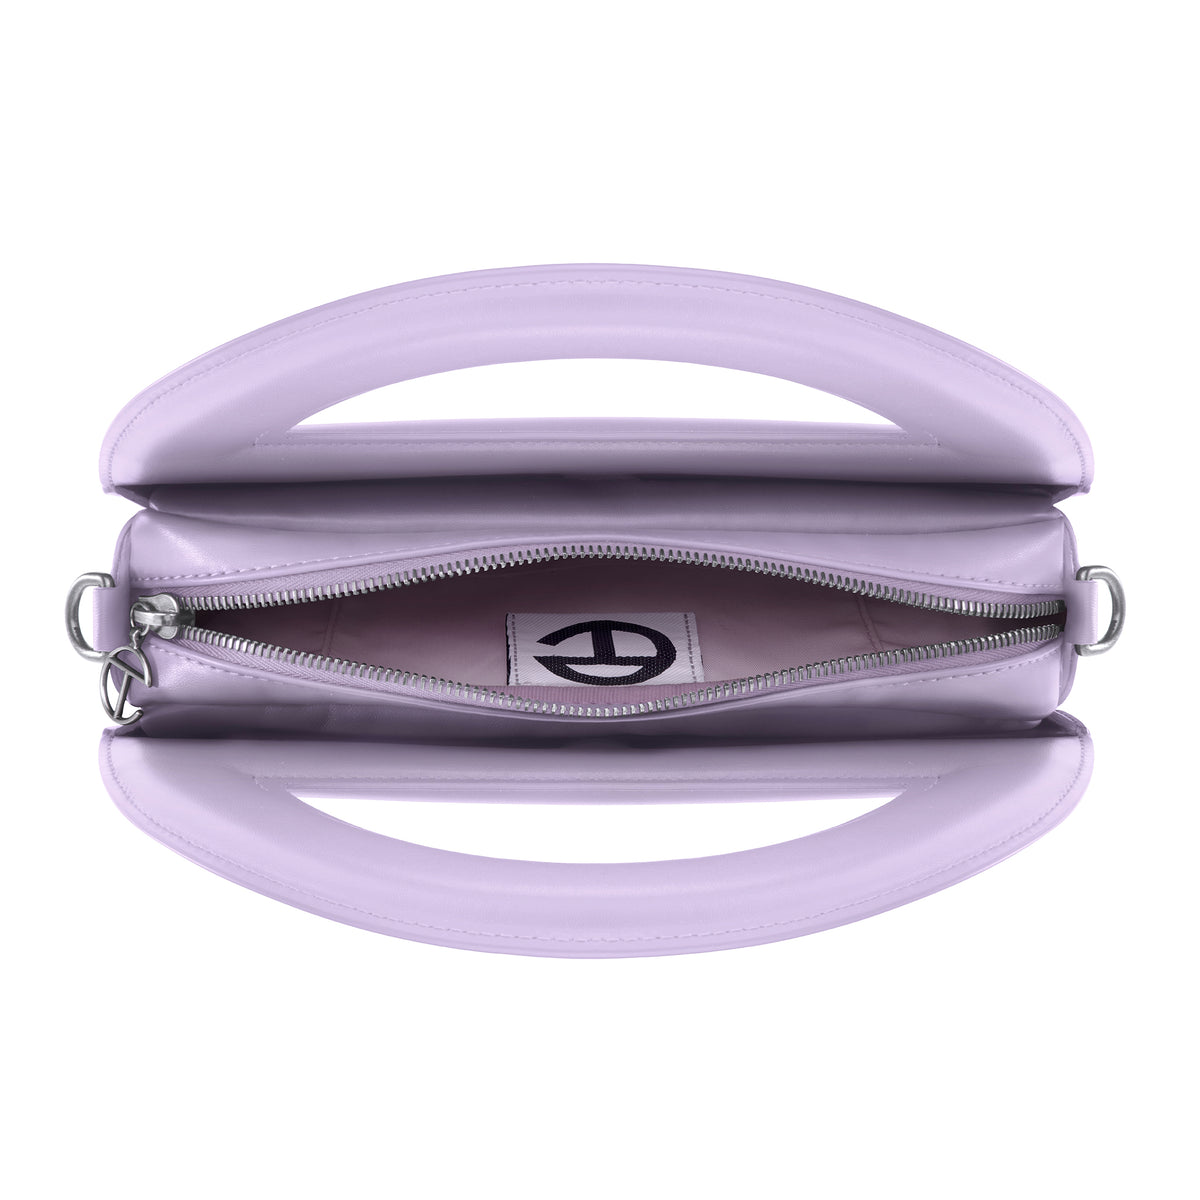 Round Telfar Circle Bag - Lavender